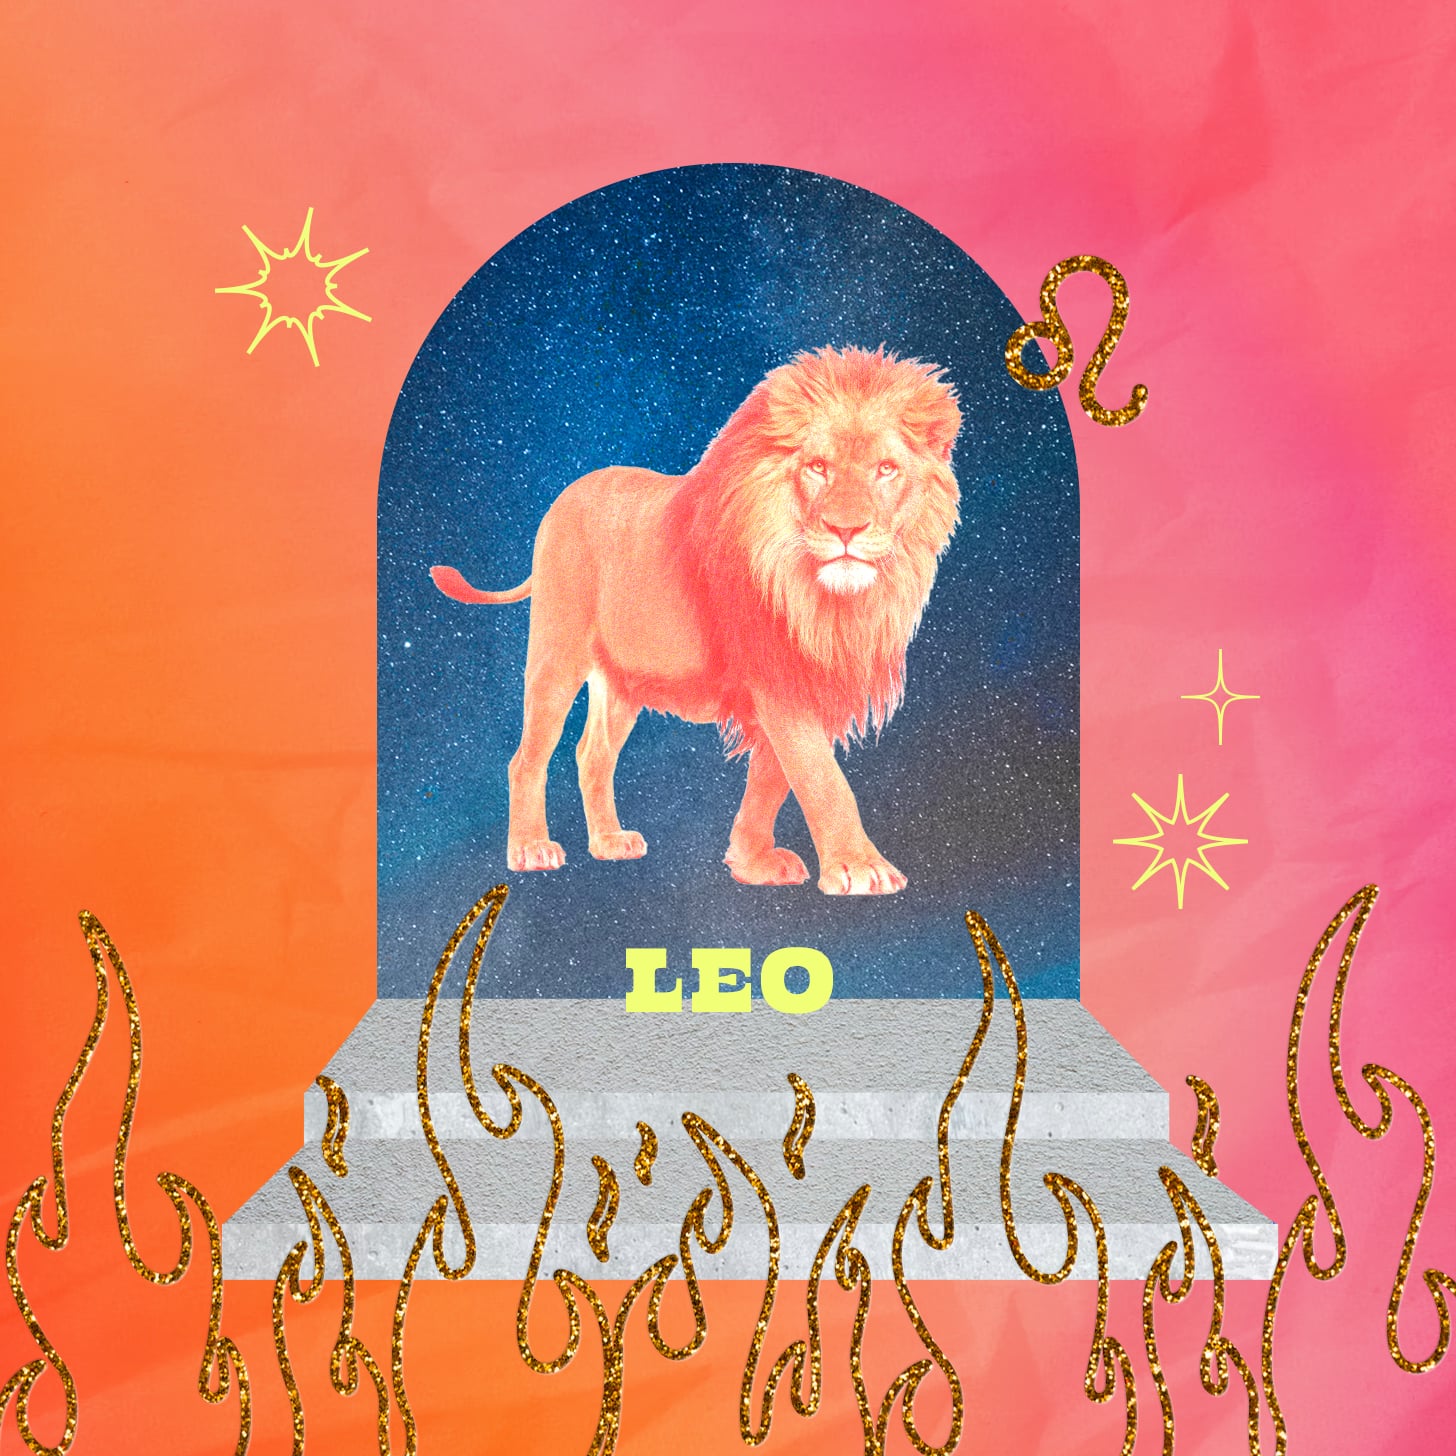 Leo weekly horoscope for October 9, 2022